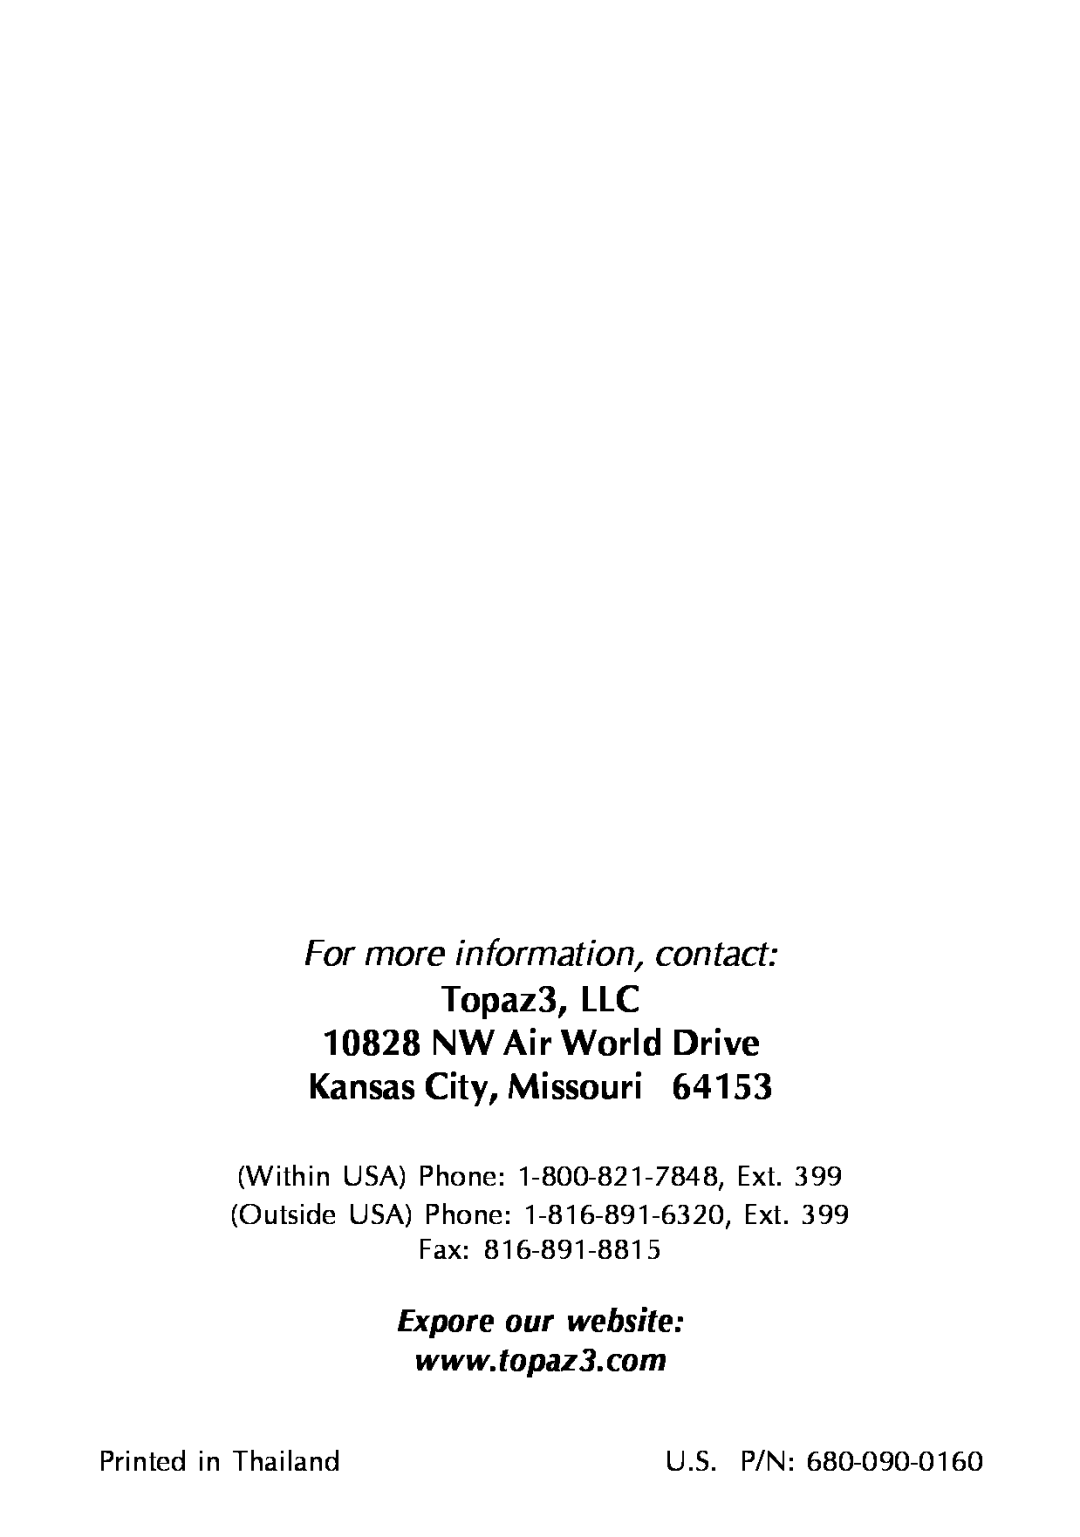 Maxon Telecom SP-330 & SP-340 Topaz3, LLC 10828 NW Air World Drive, Kansas City, Missouri, For more information, contact 